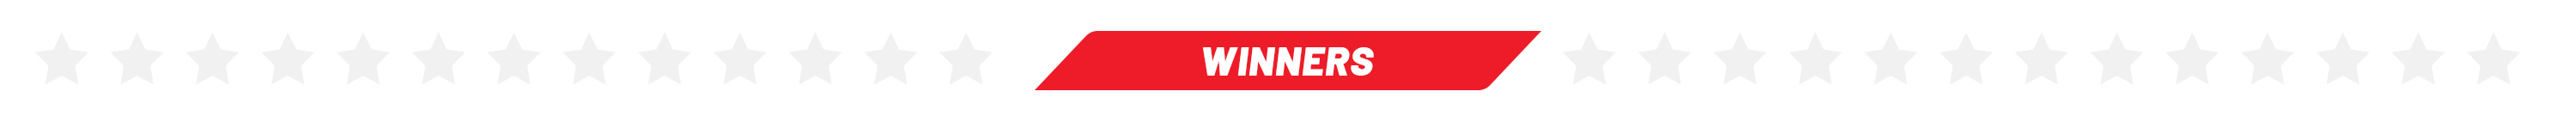 Winners_Divider